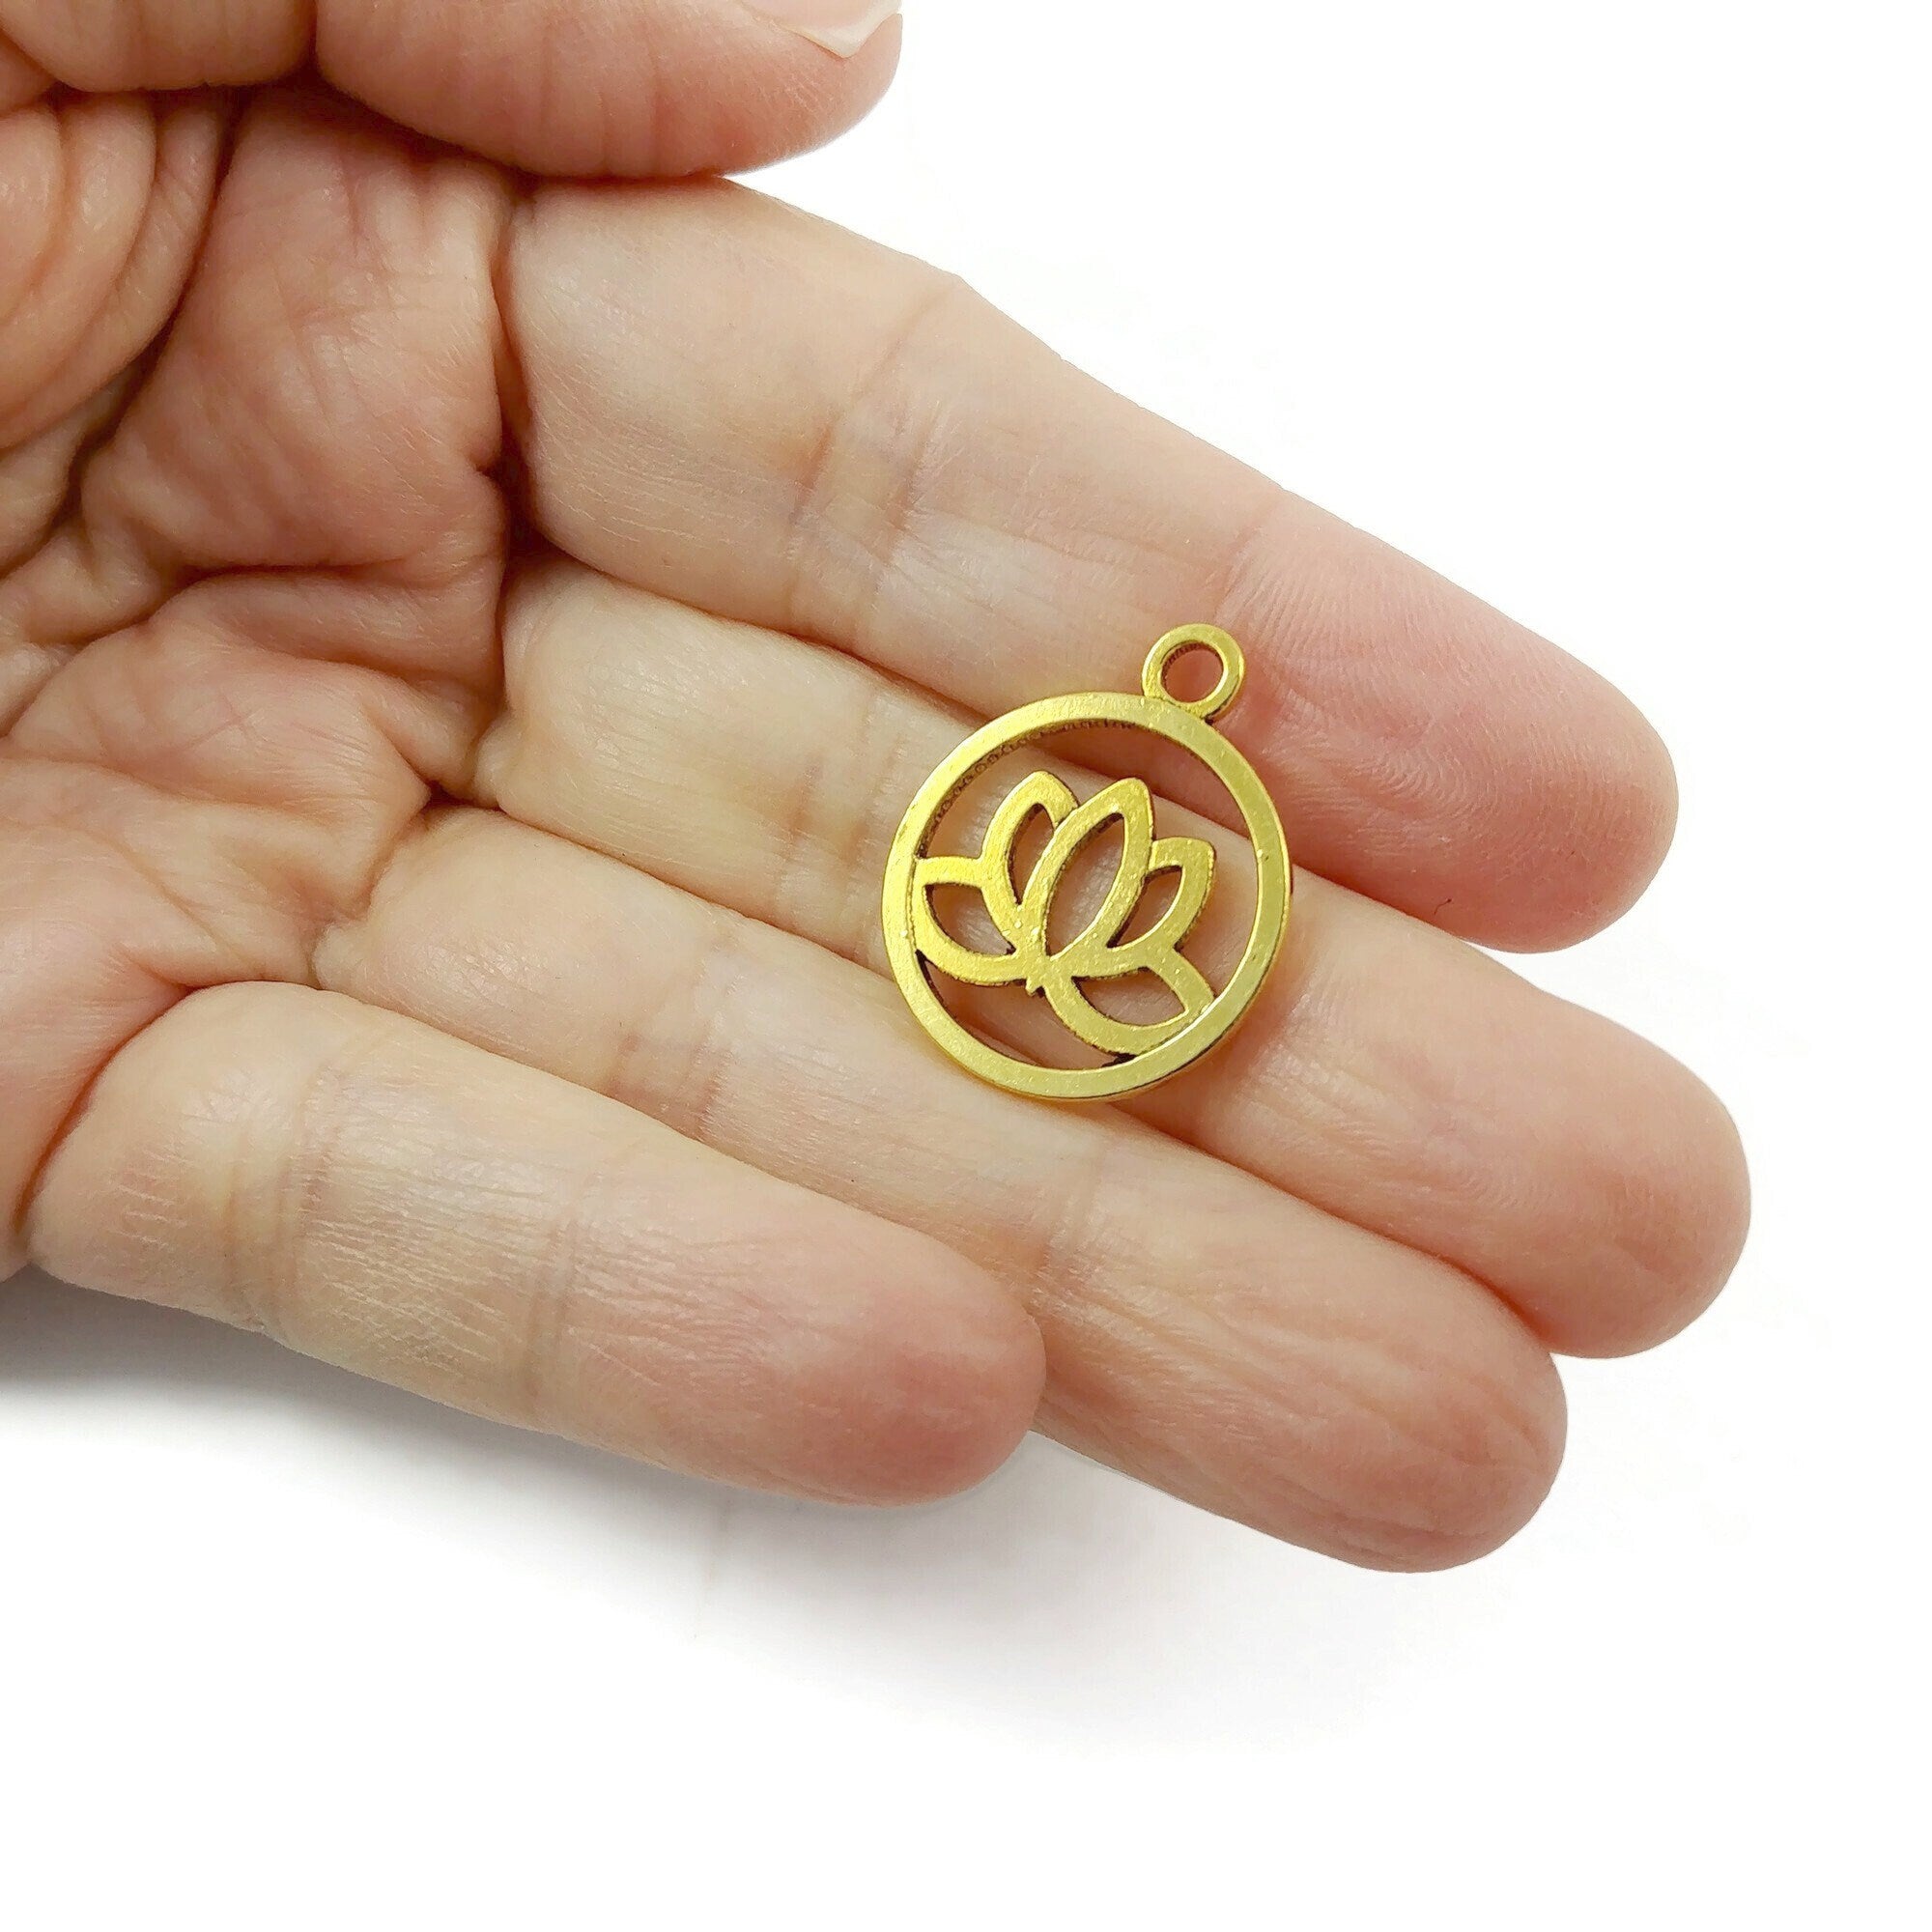 Gold lotus charms, Nickel free metal pendants, Yoga, zen, chakra jewelry making